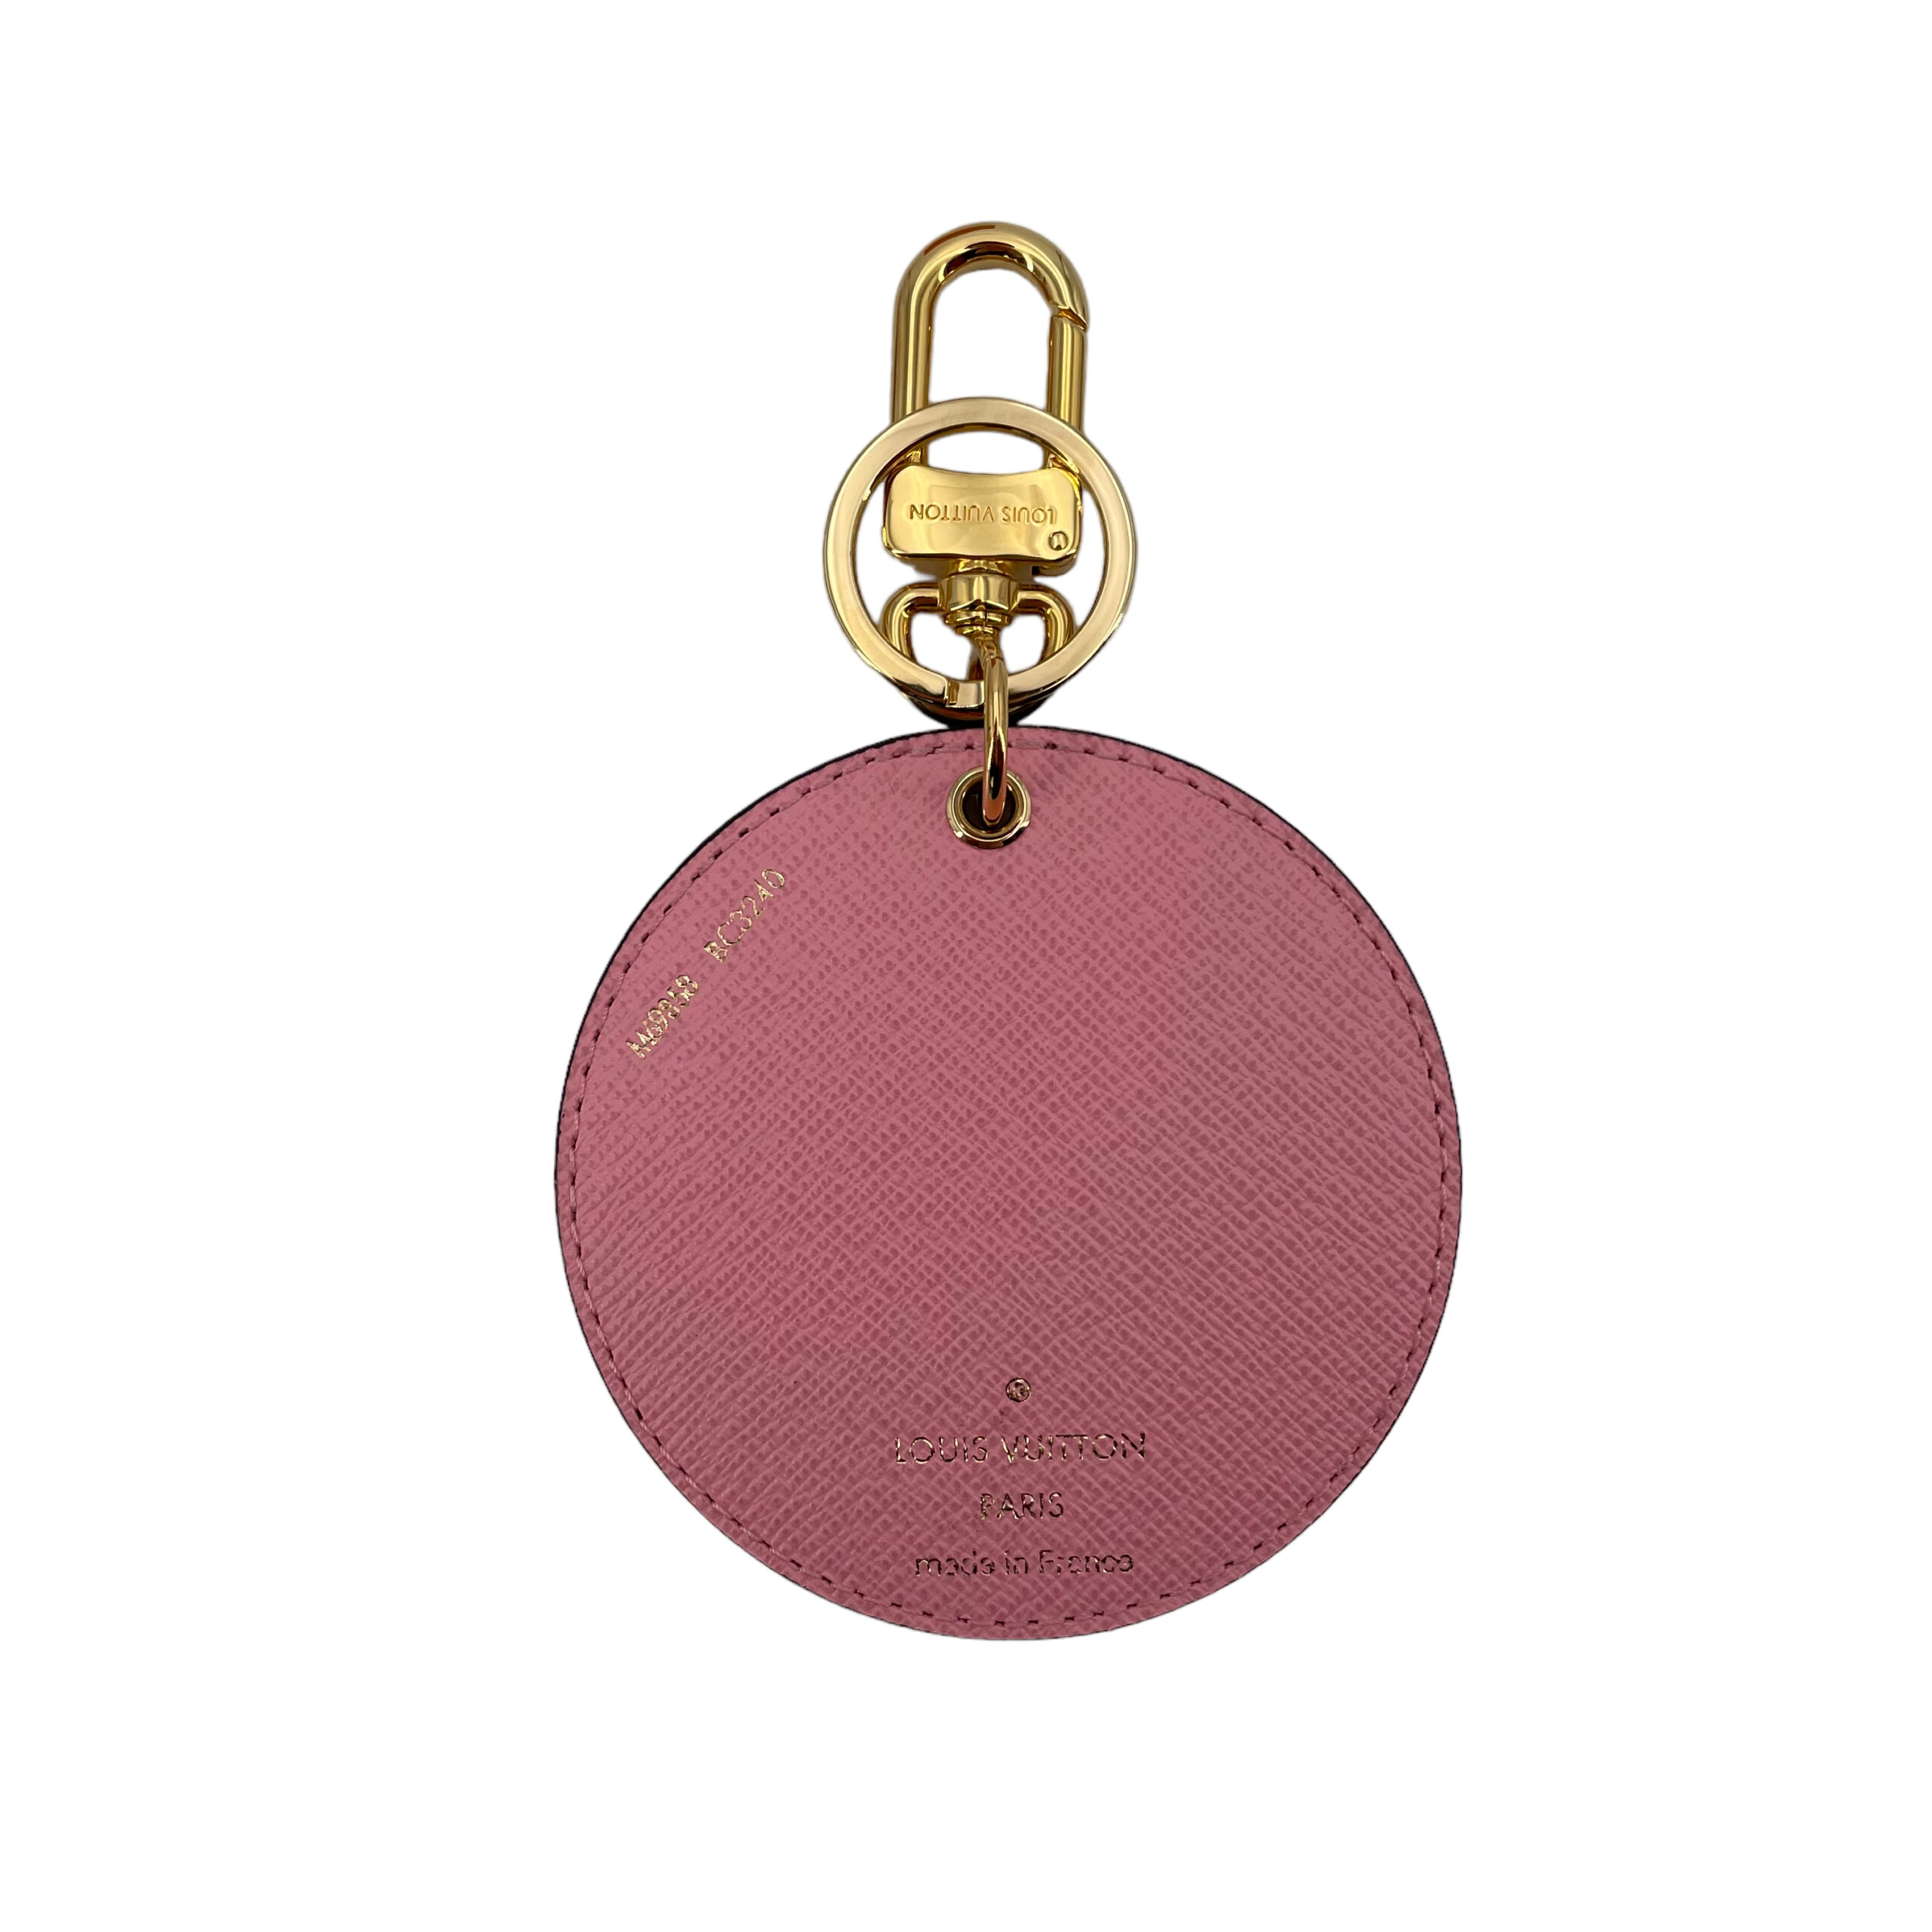 New! Louis Vuitton Vivienne Funfair Xmas 2020 Bag Charm Key Holder